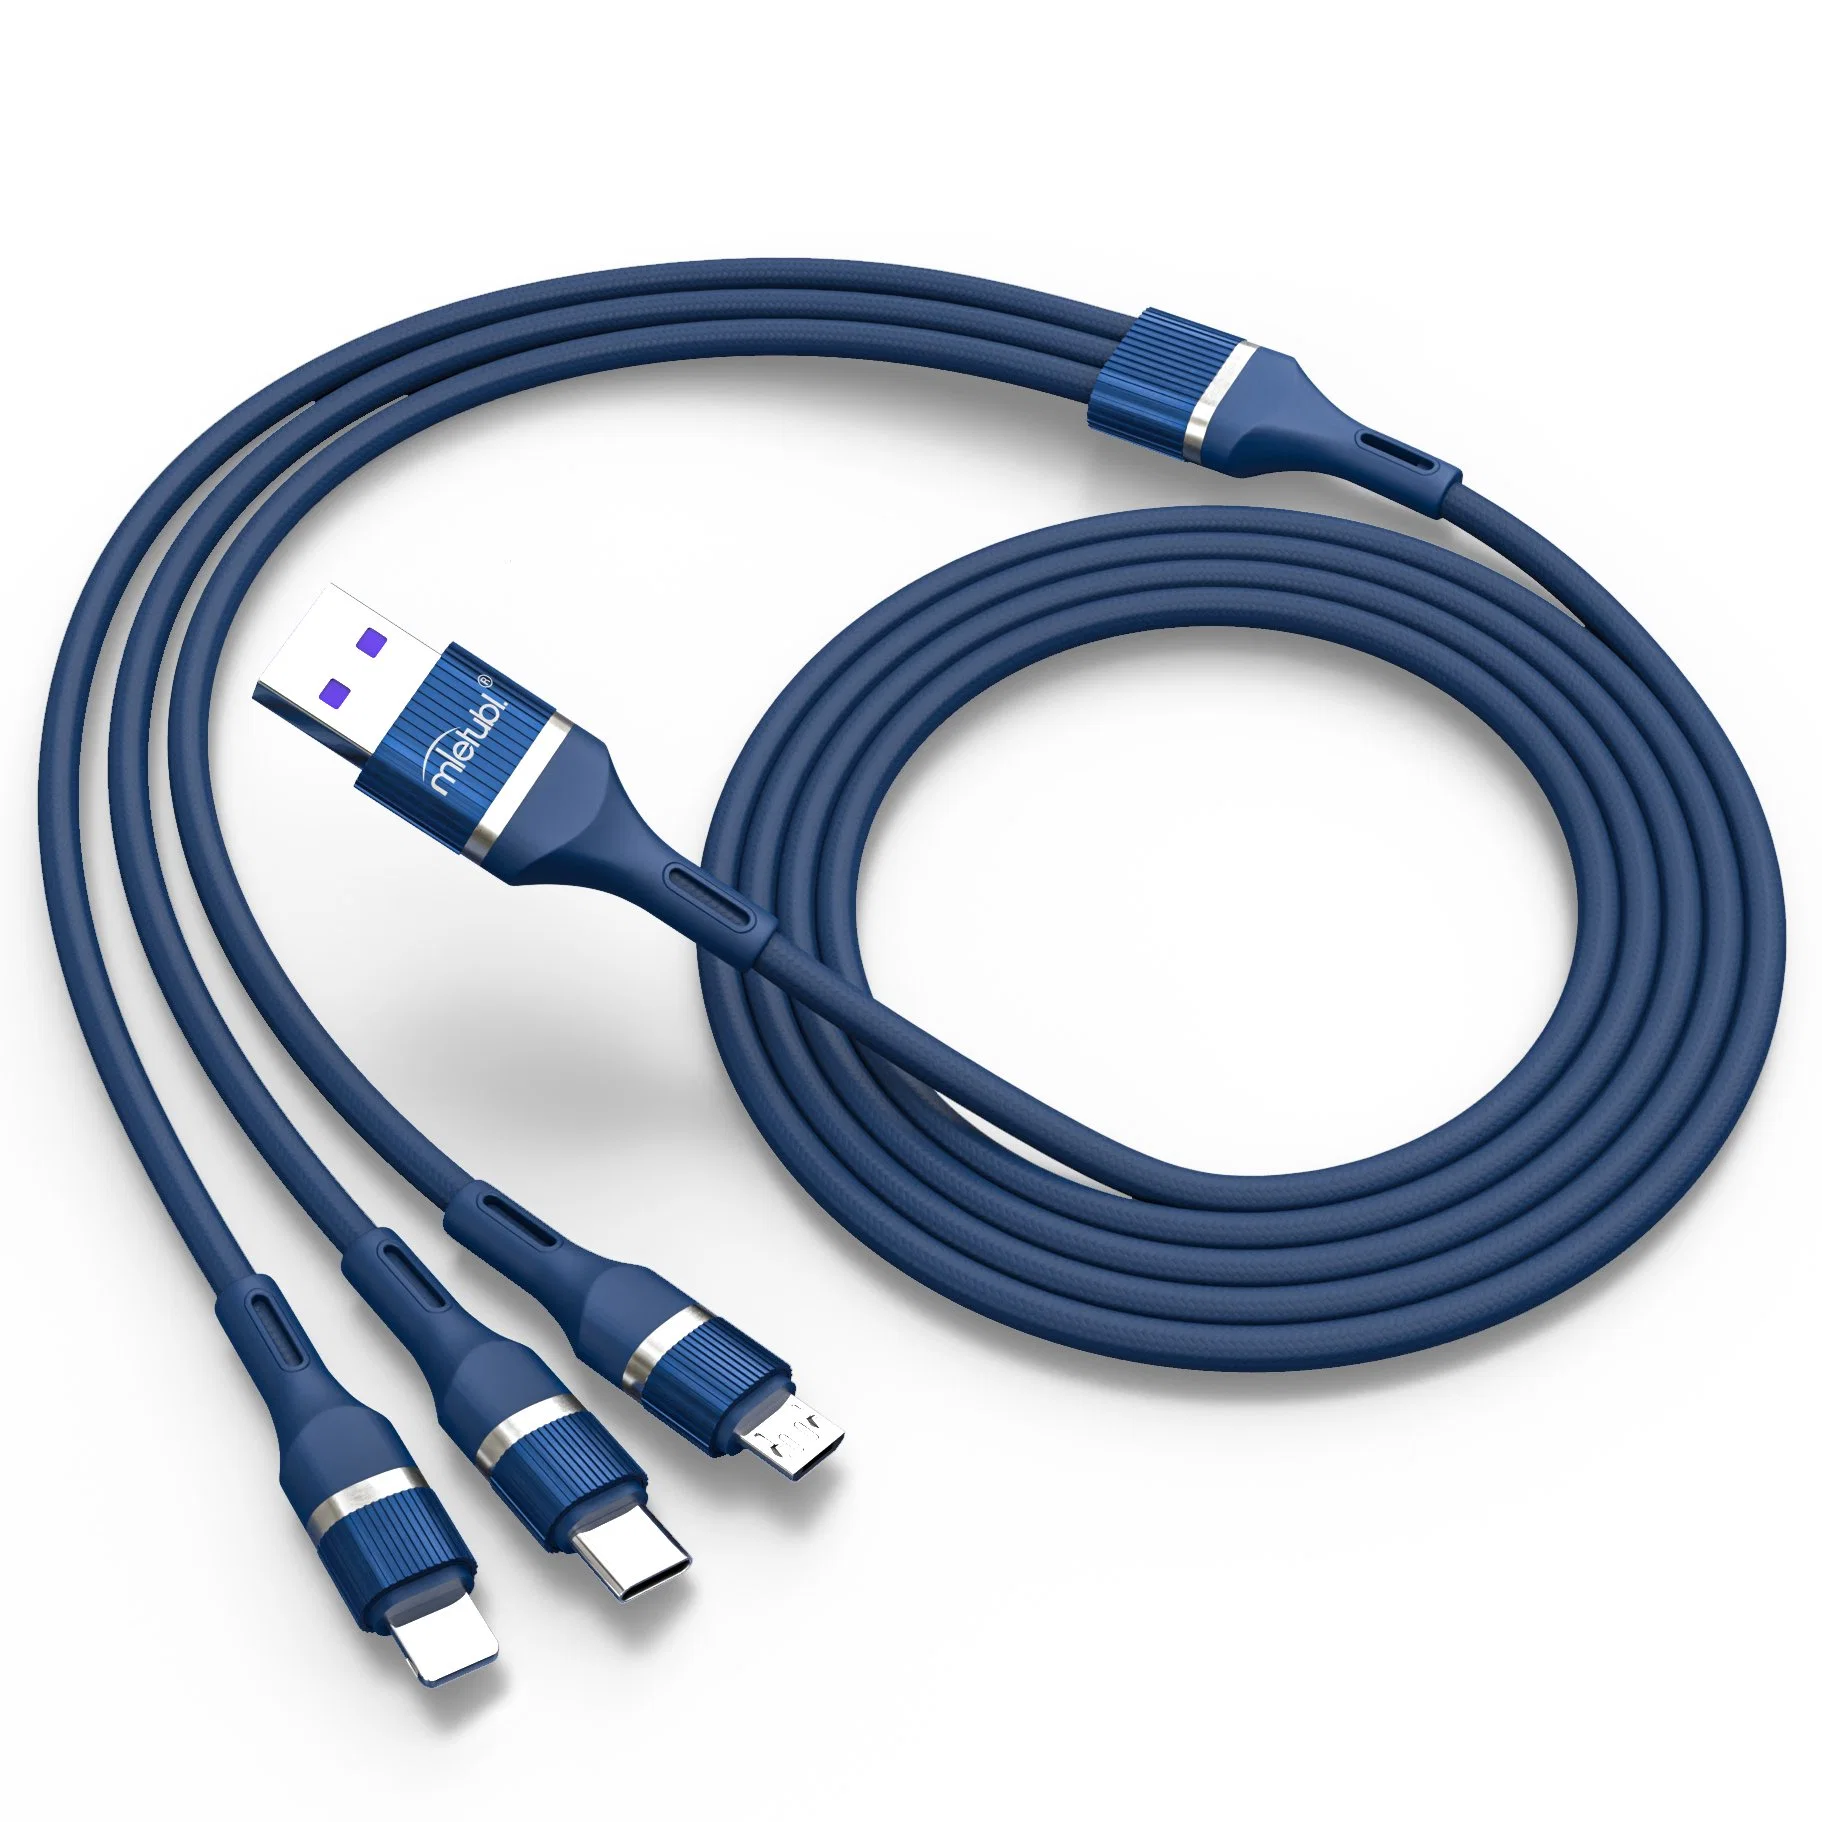 Teléfono móvil Multifuntional Mietubl cable de datos 3 en 1 USB cable de datos para Andriod/iPhone/Micro USB